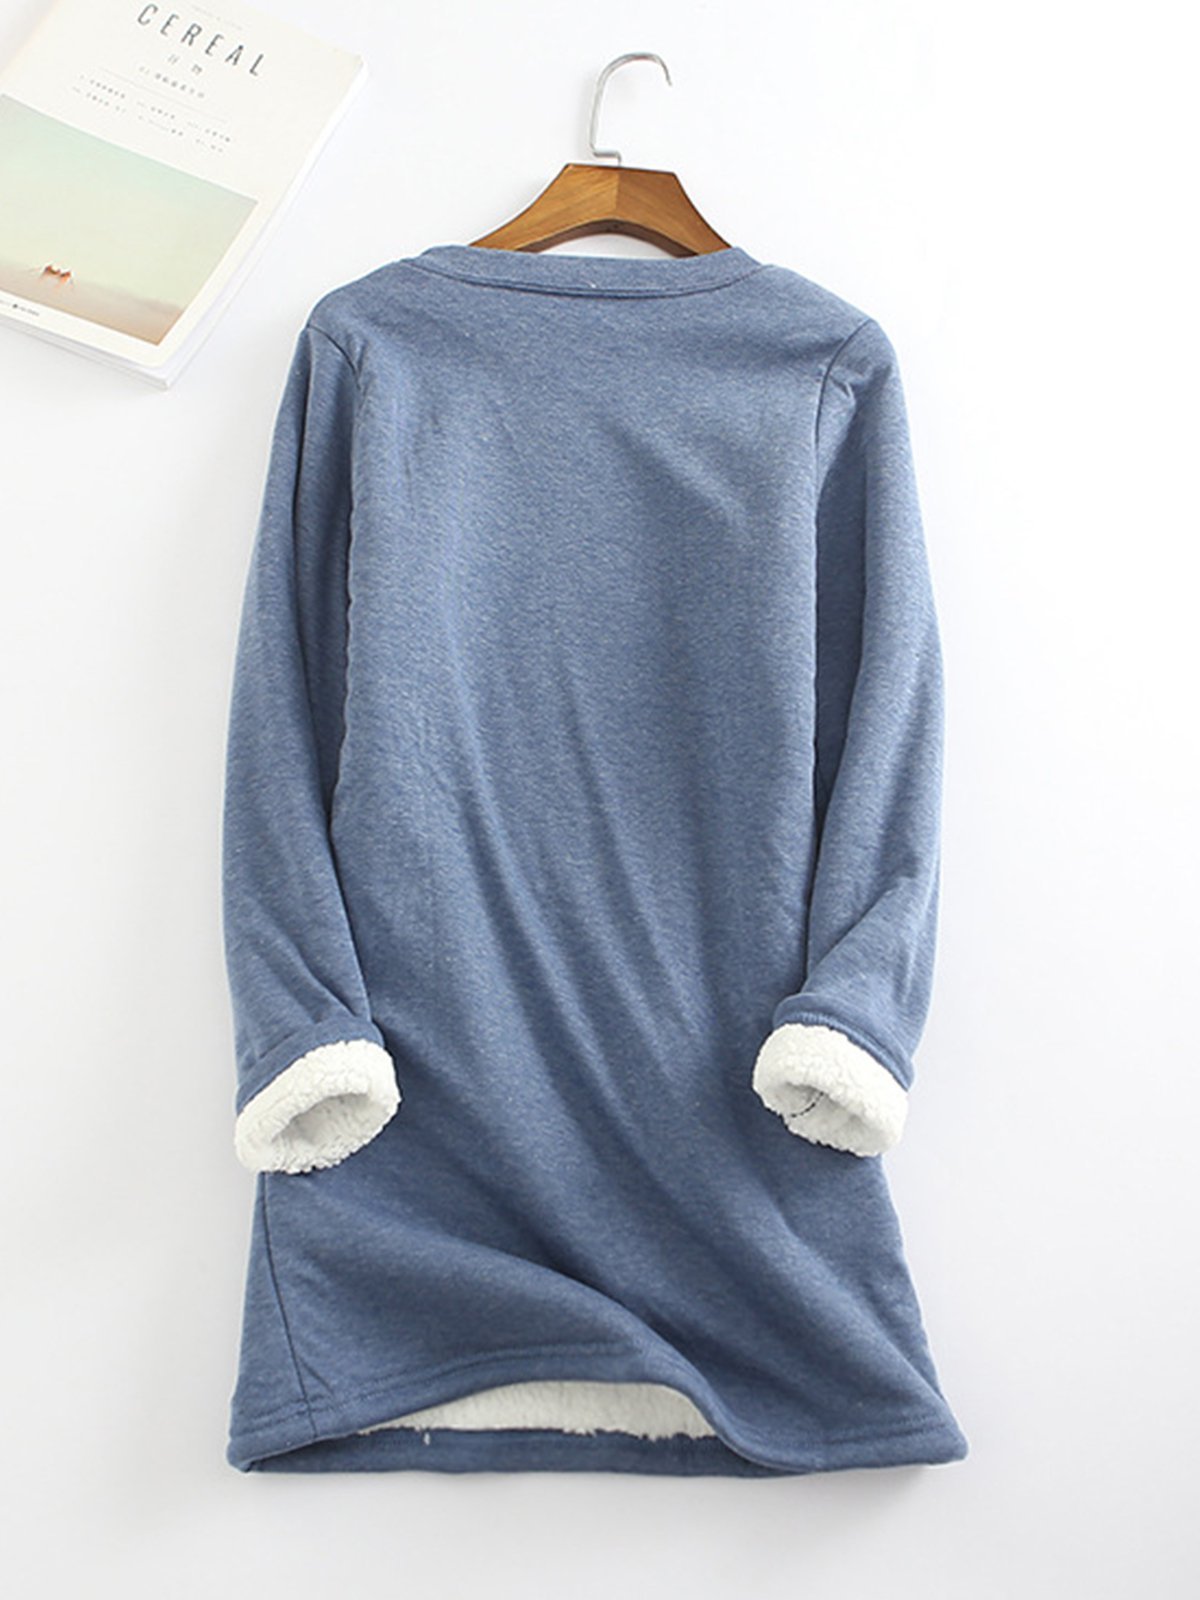 Winter Warm Thick Fleece Thermal Underwear Long Sleeve Cotton T-Shirt